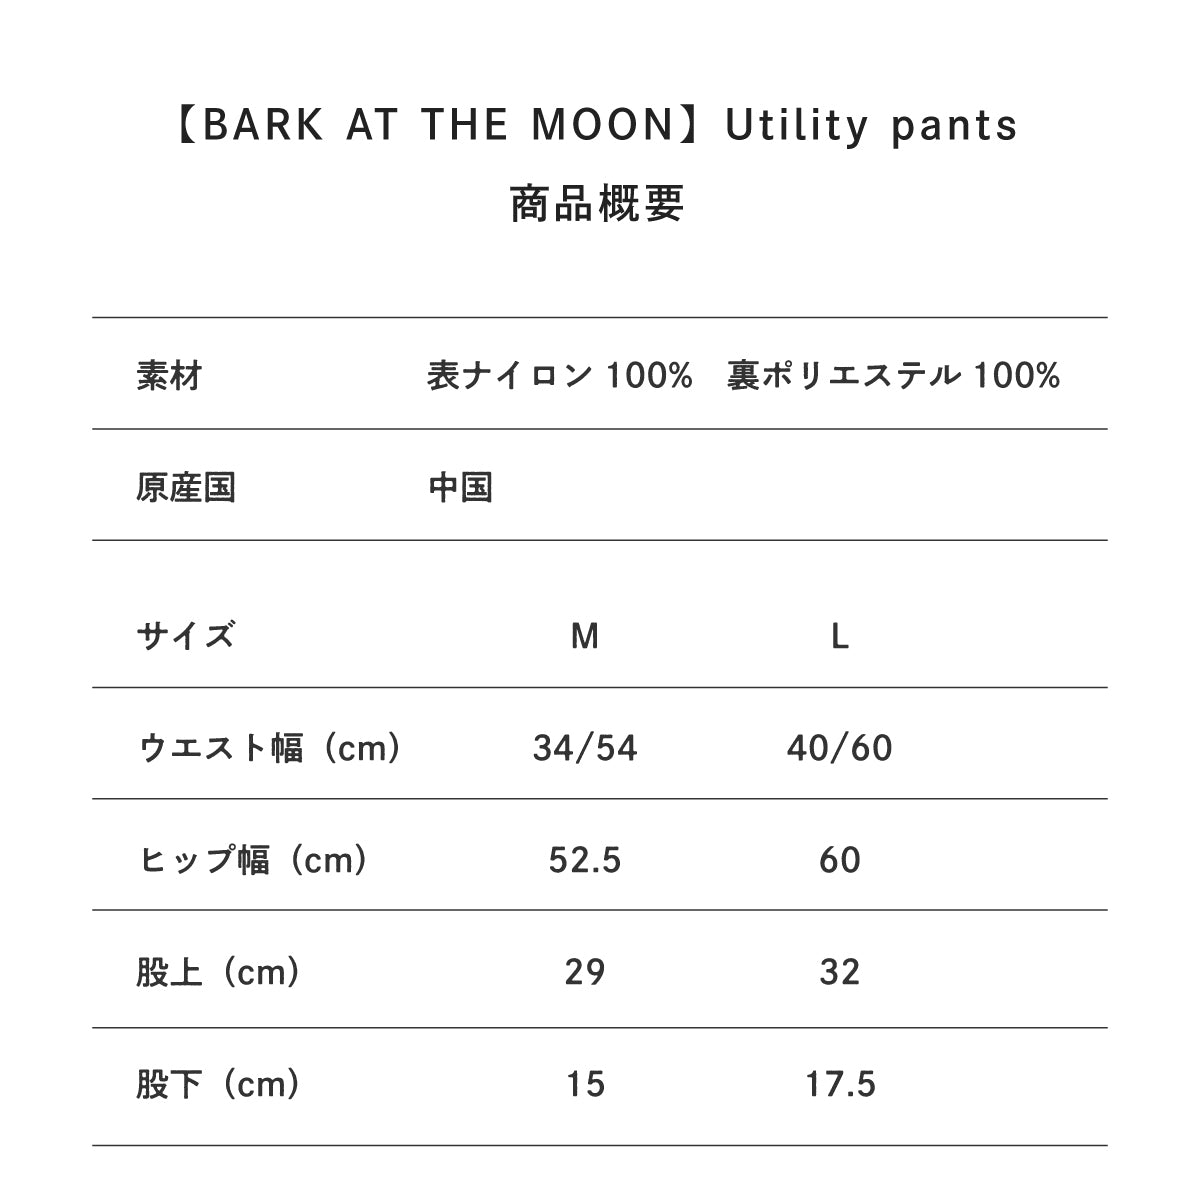 Utility pants